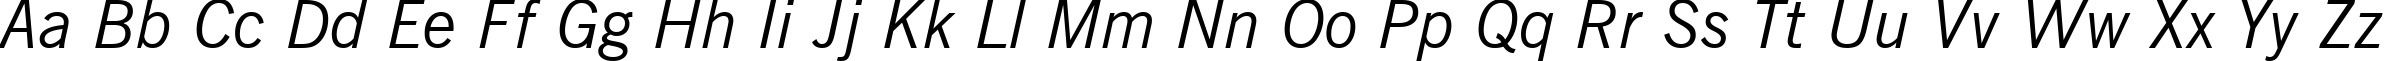 Пример написания английского алфавита шрифтом News Gothic Italic BT